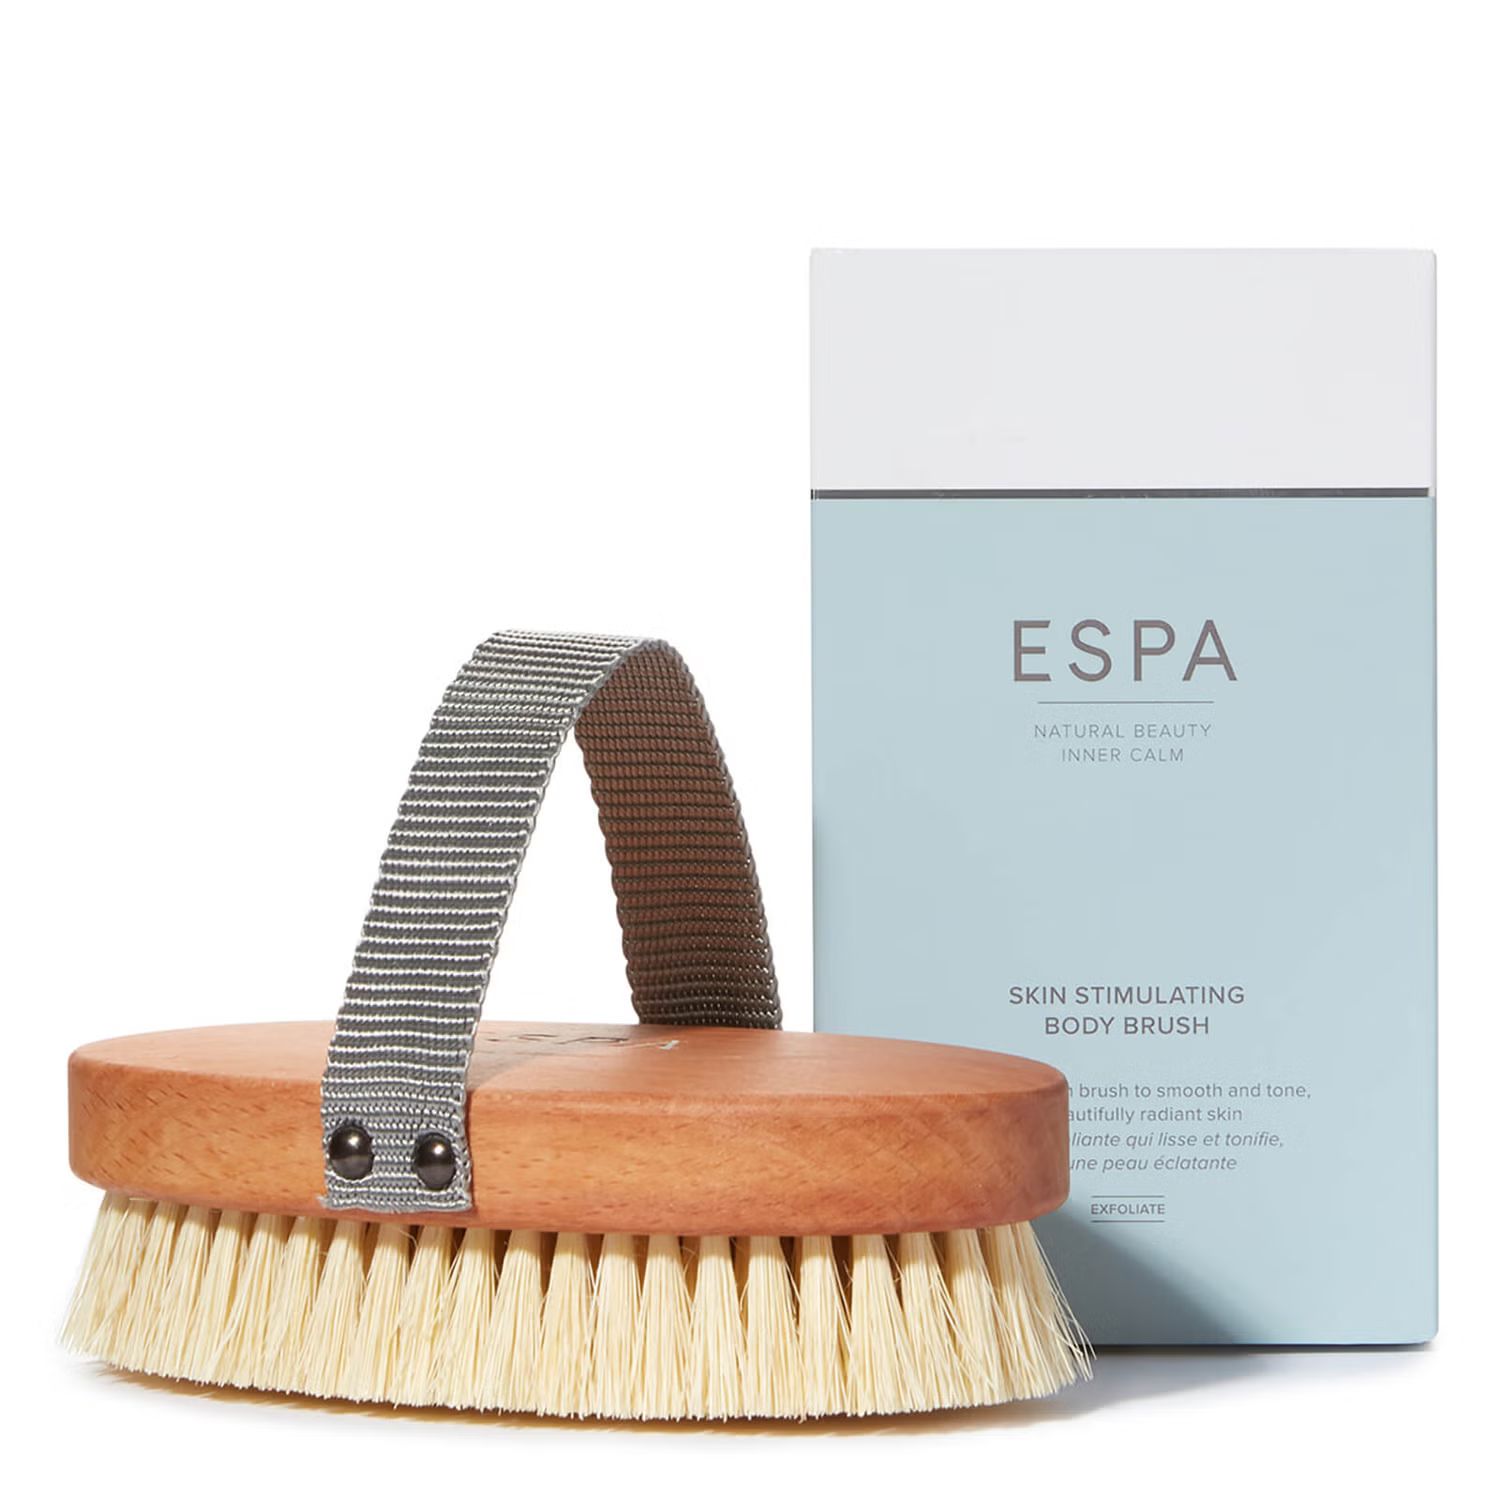 ESPA Skin Stimulating Body Brush 1 piece | Dermstore (US)